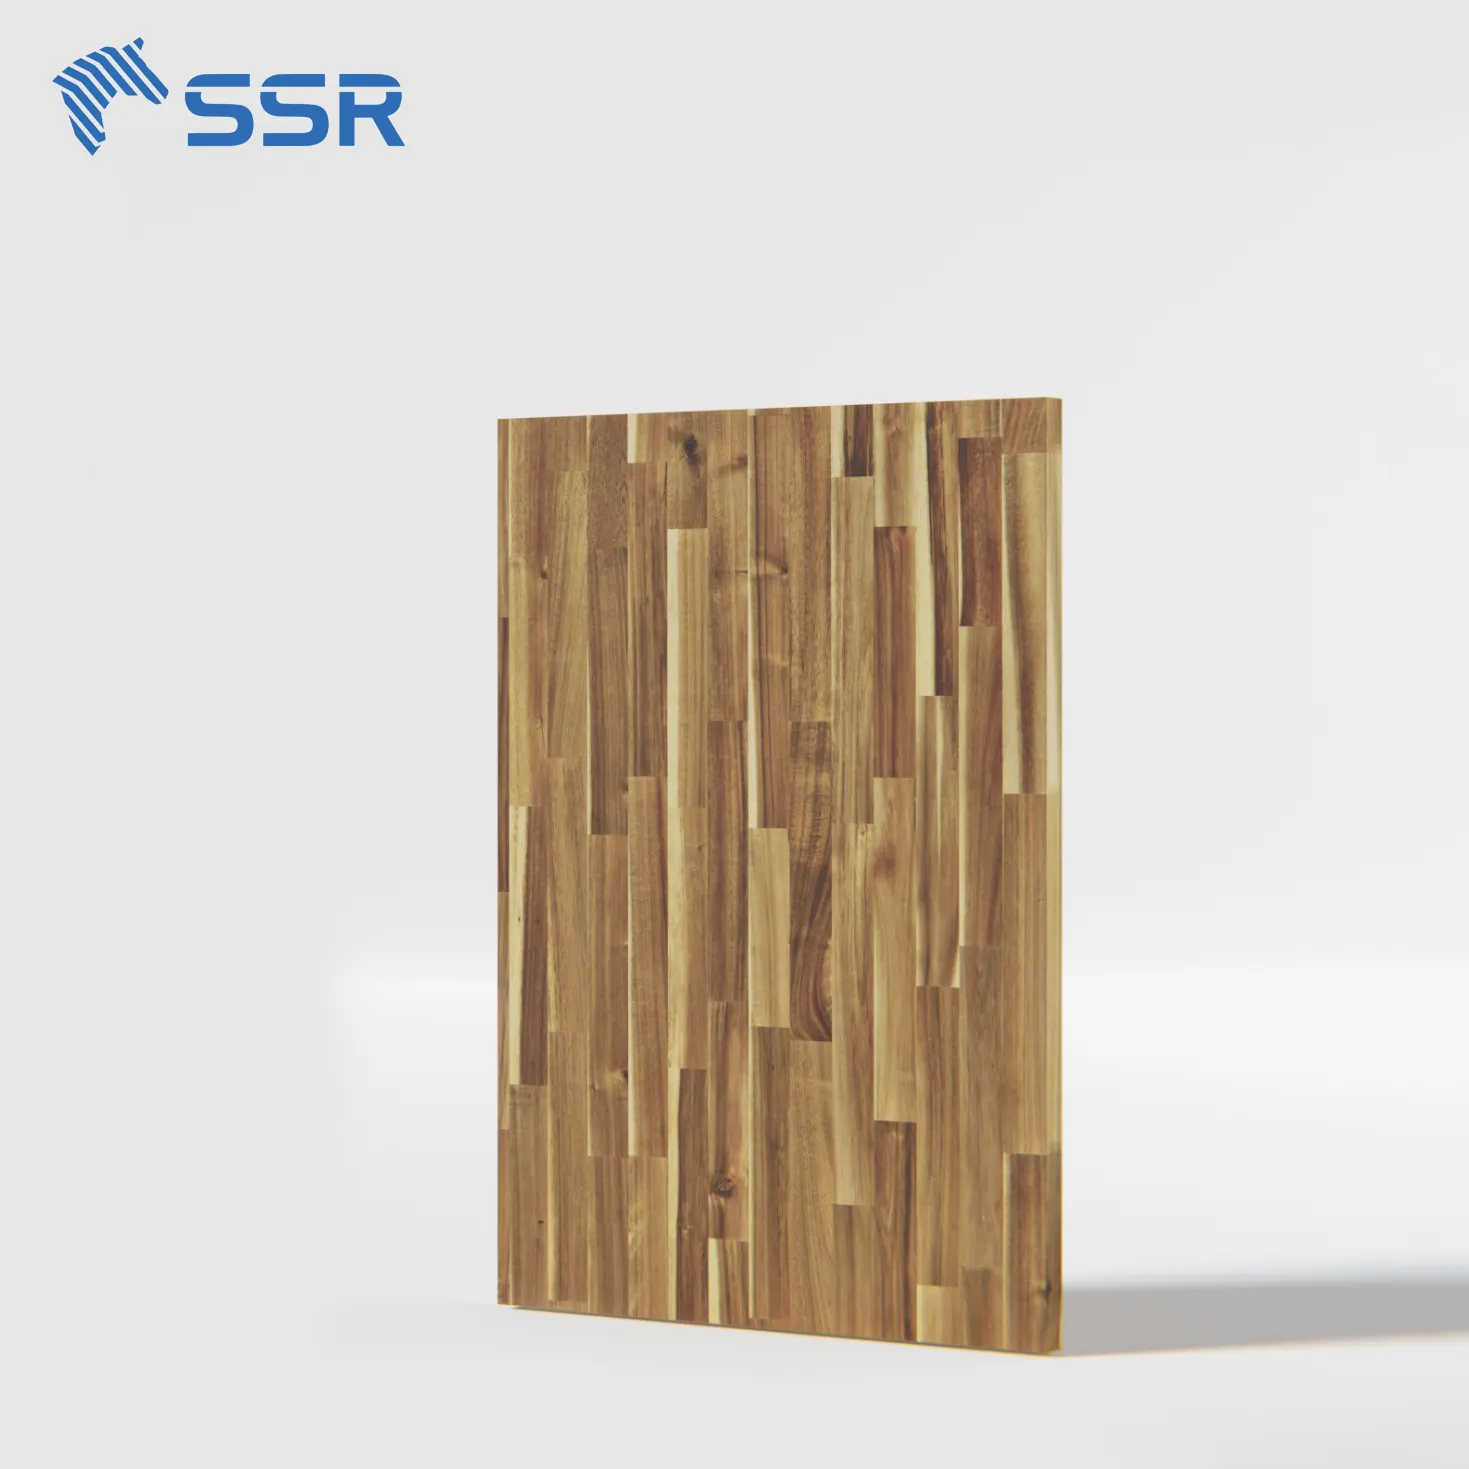 SSR VINA - Acacia Butcher Block Countertop - High quality grade wood table top tables top kitchen countertop